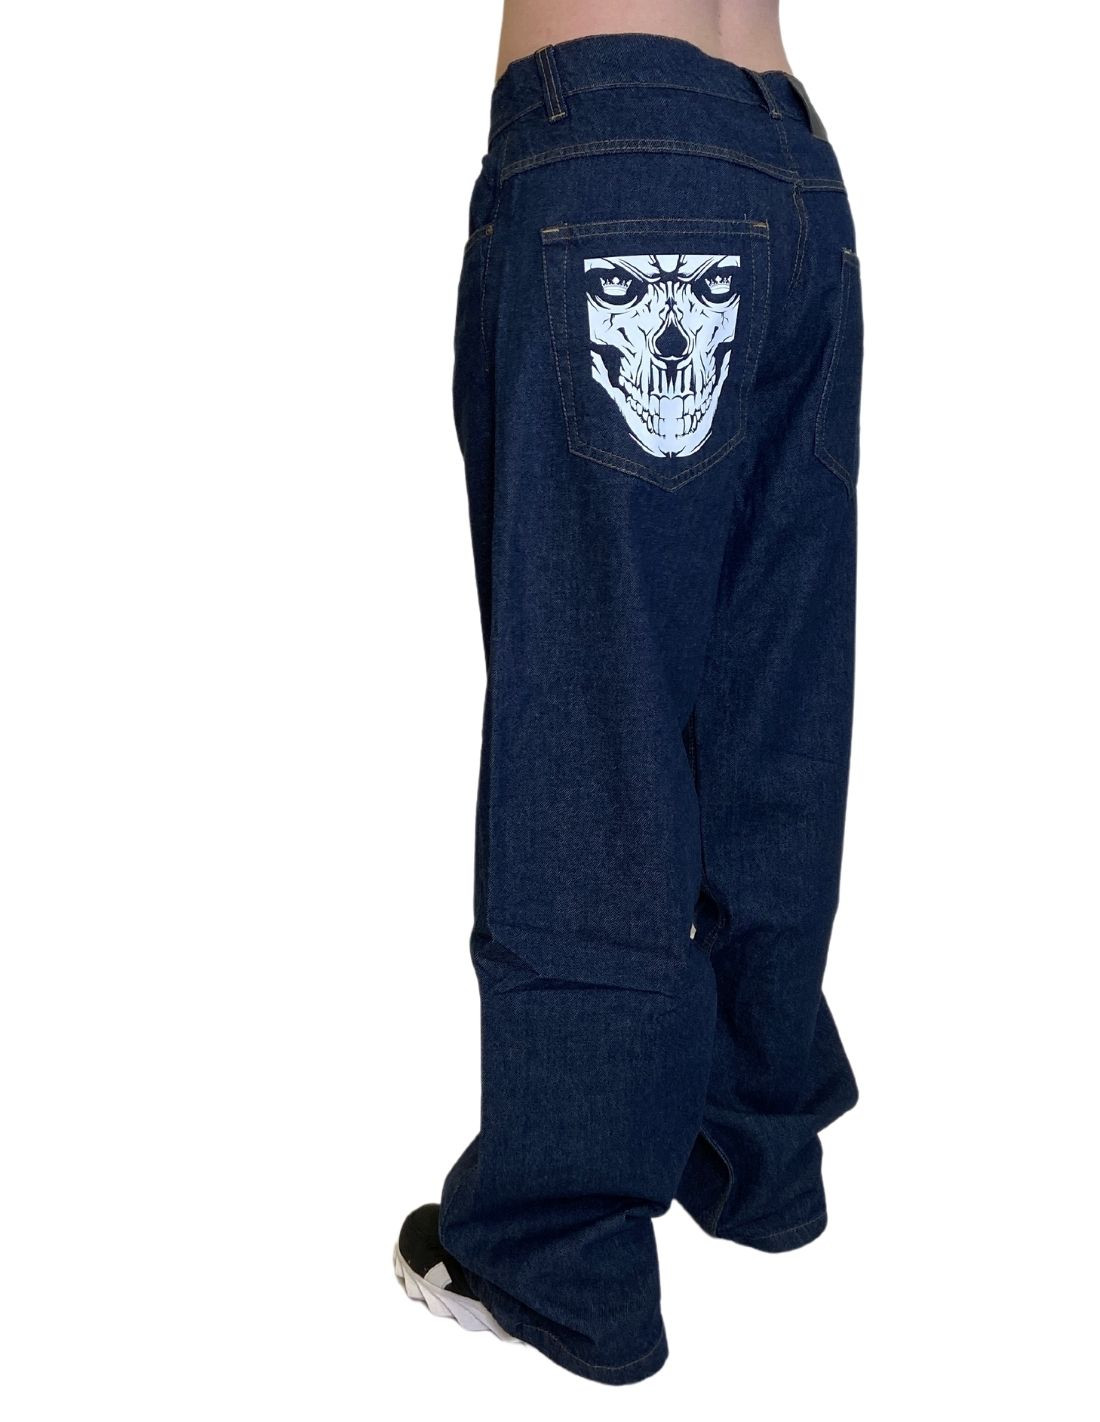 BSAT Skull Baggy Jeans Indigo Blue